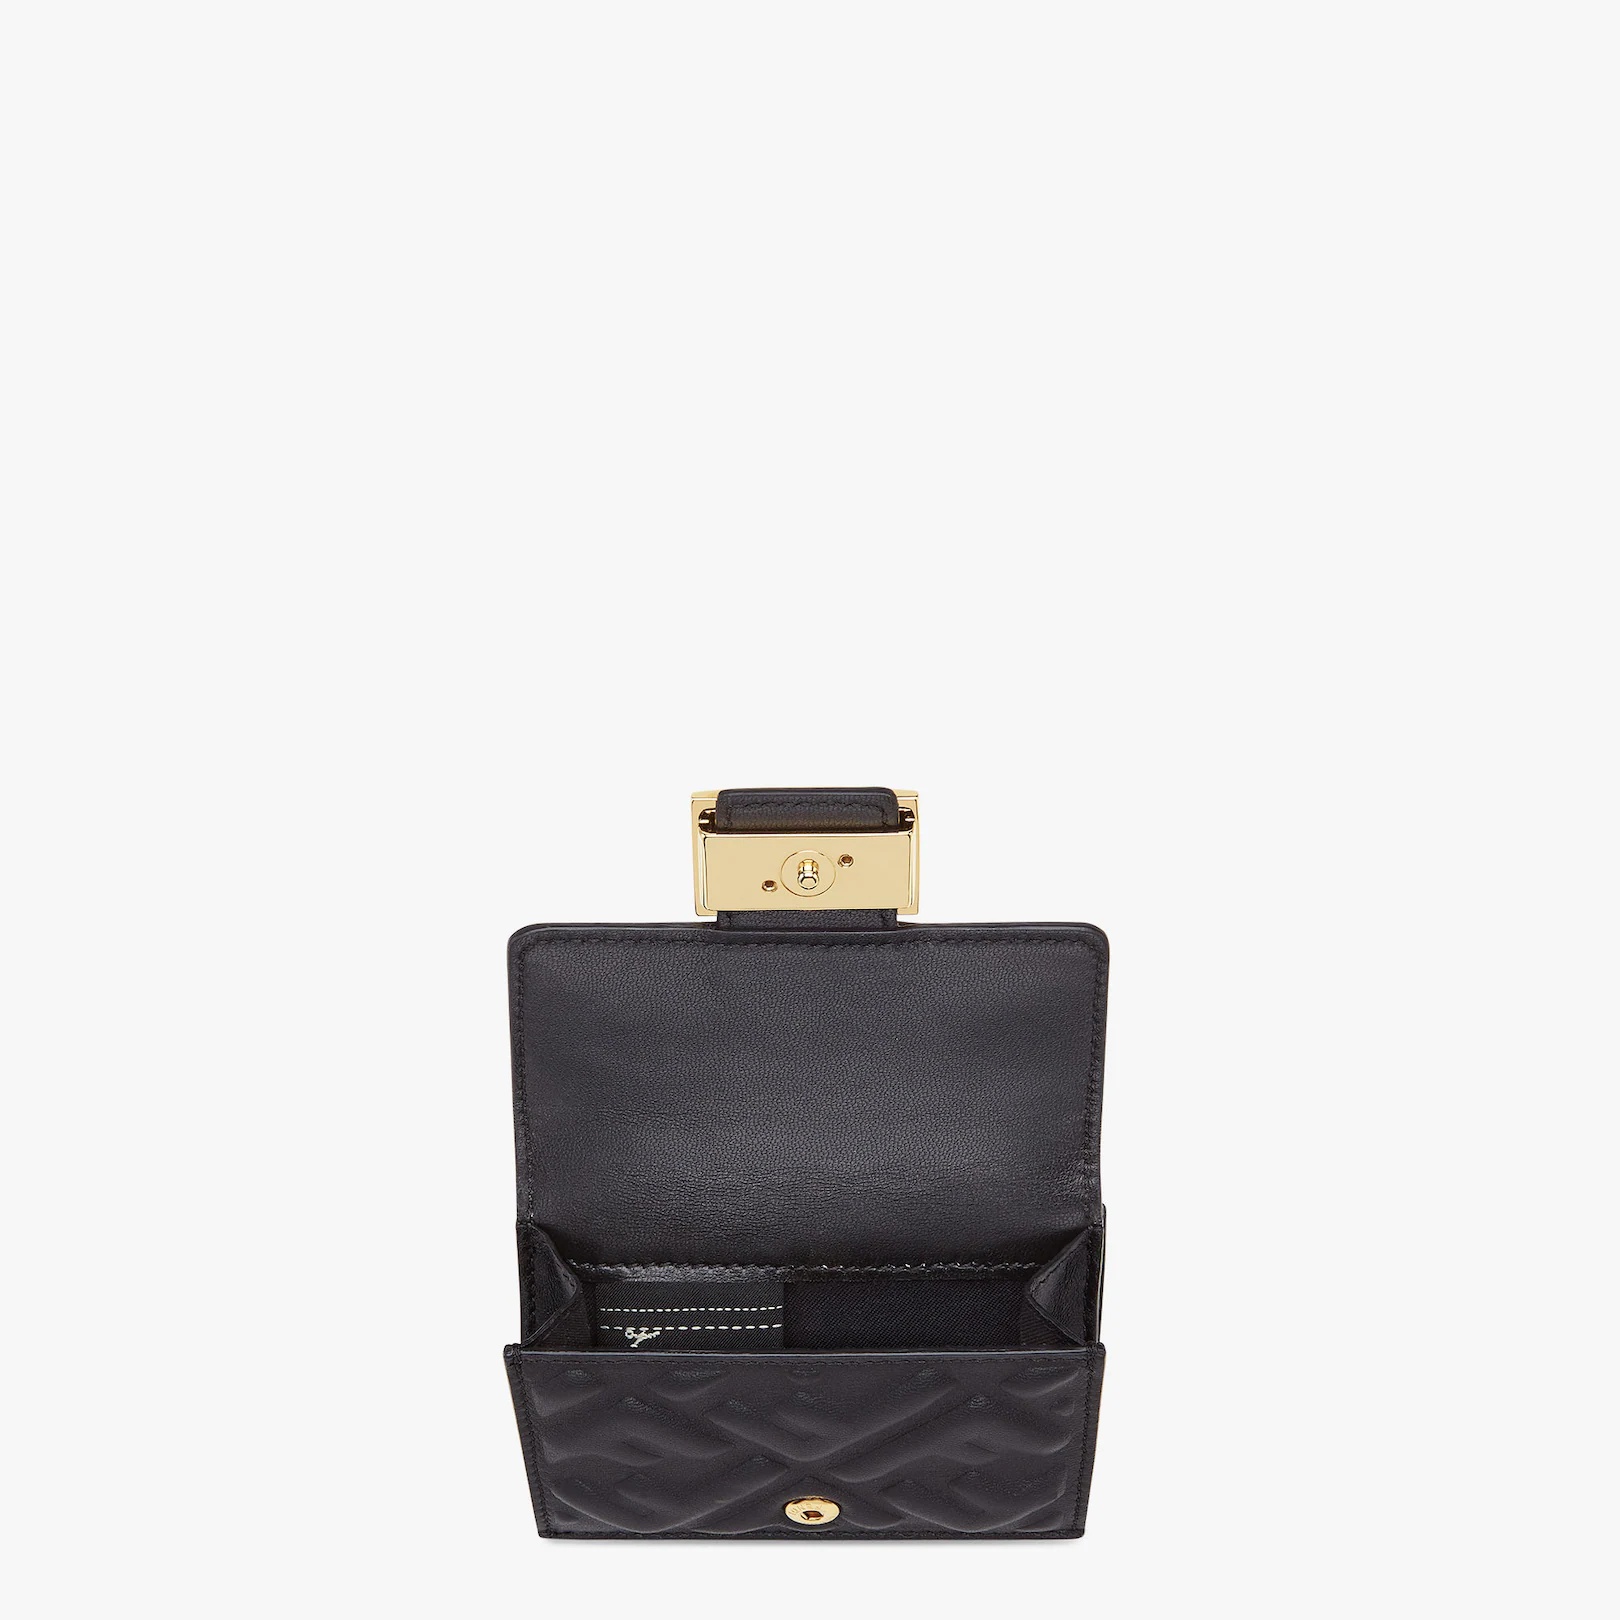 Black nappa leather wallet - 3